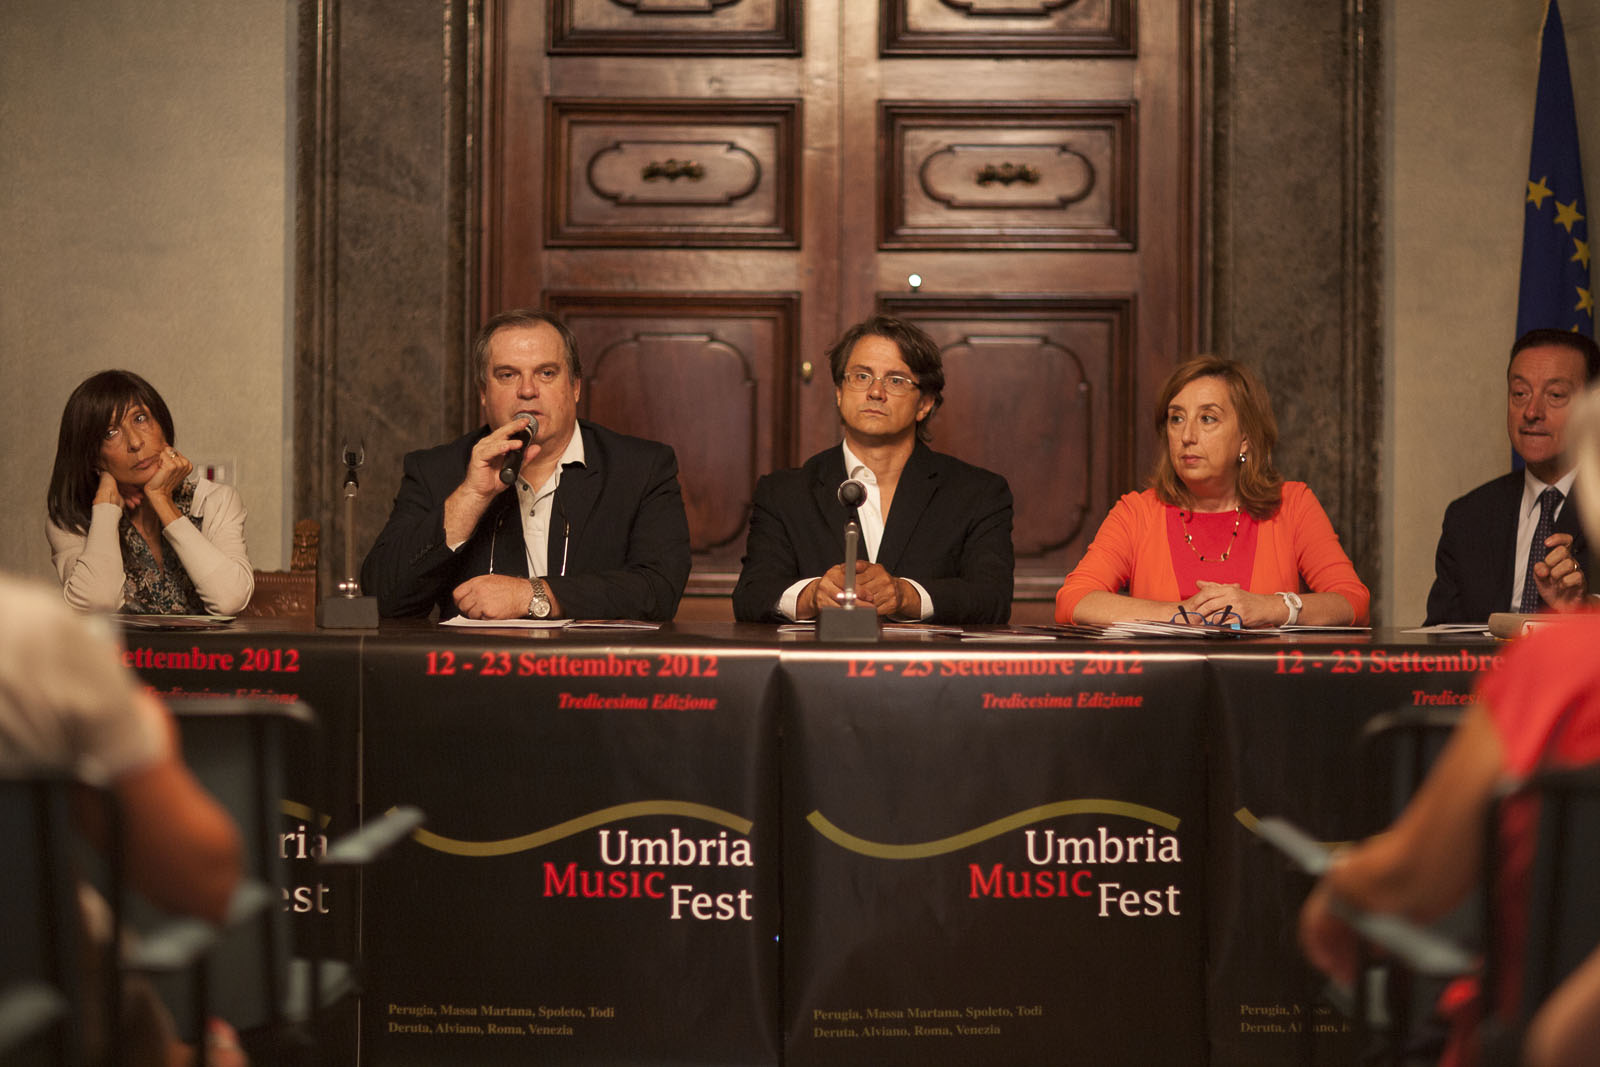 Umbria Music Fest 2012 dal 12 al 23 settembre